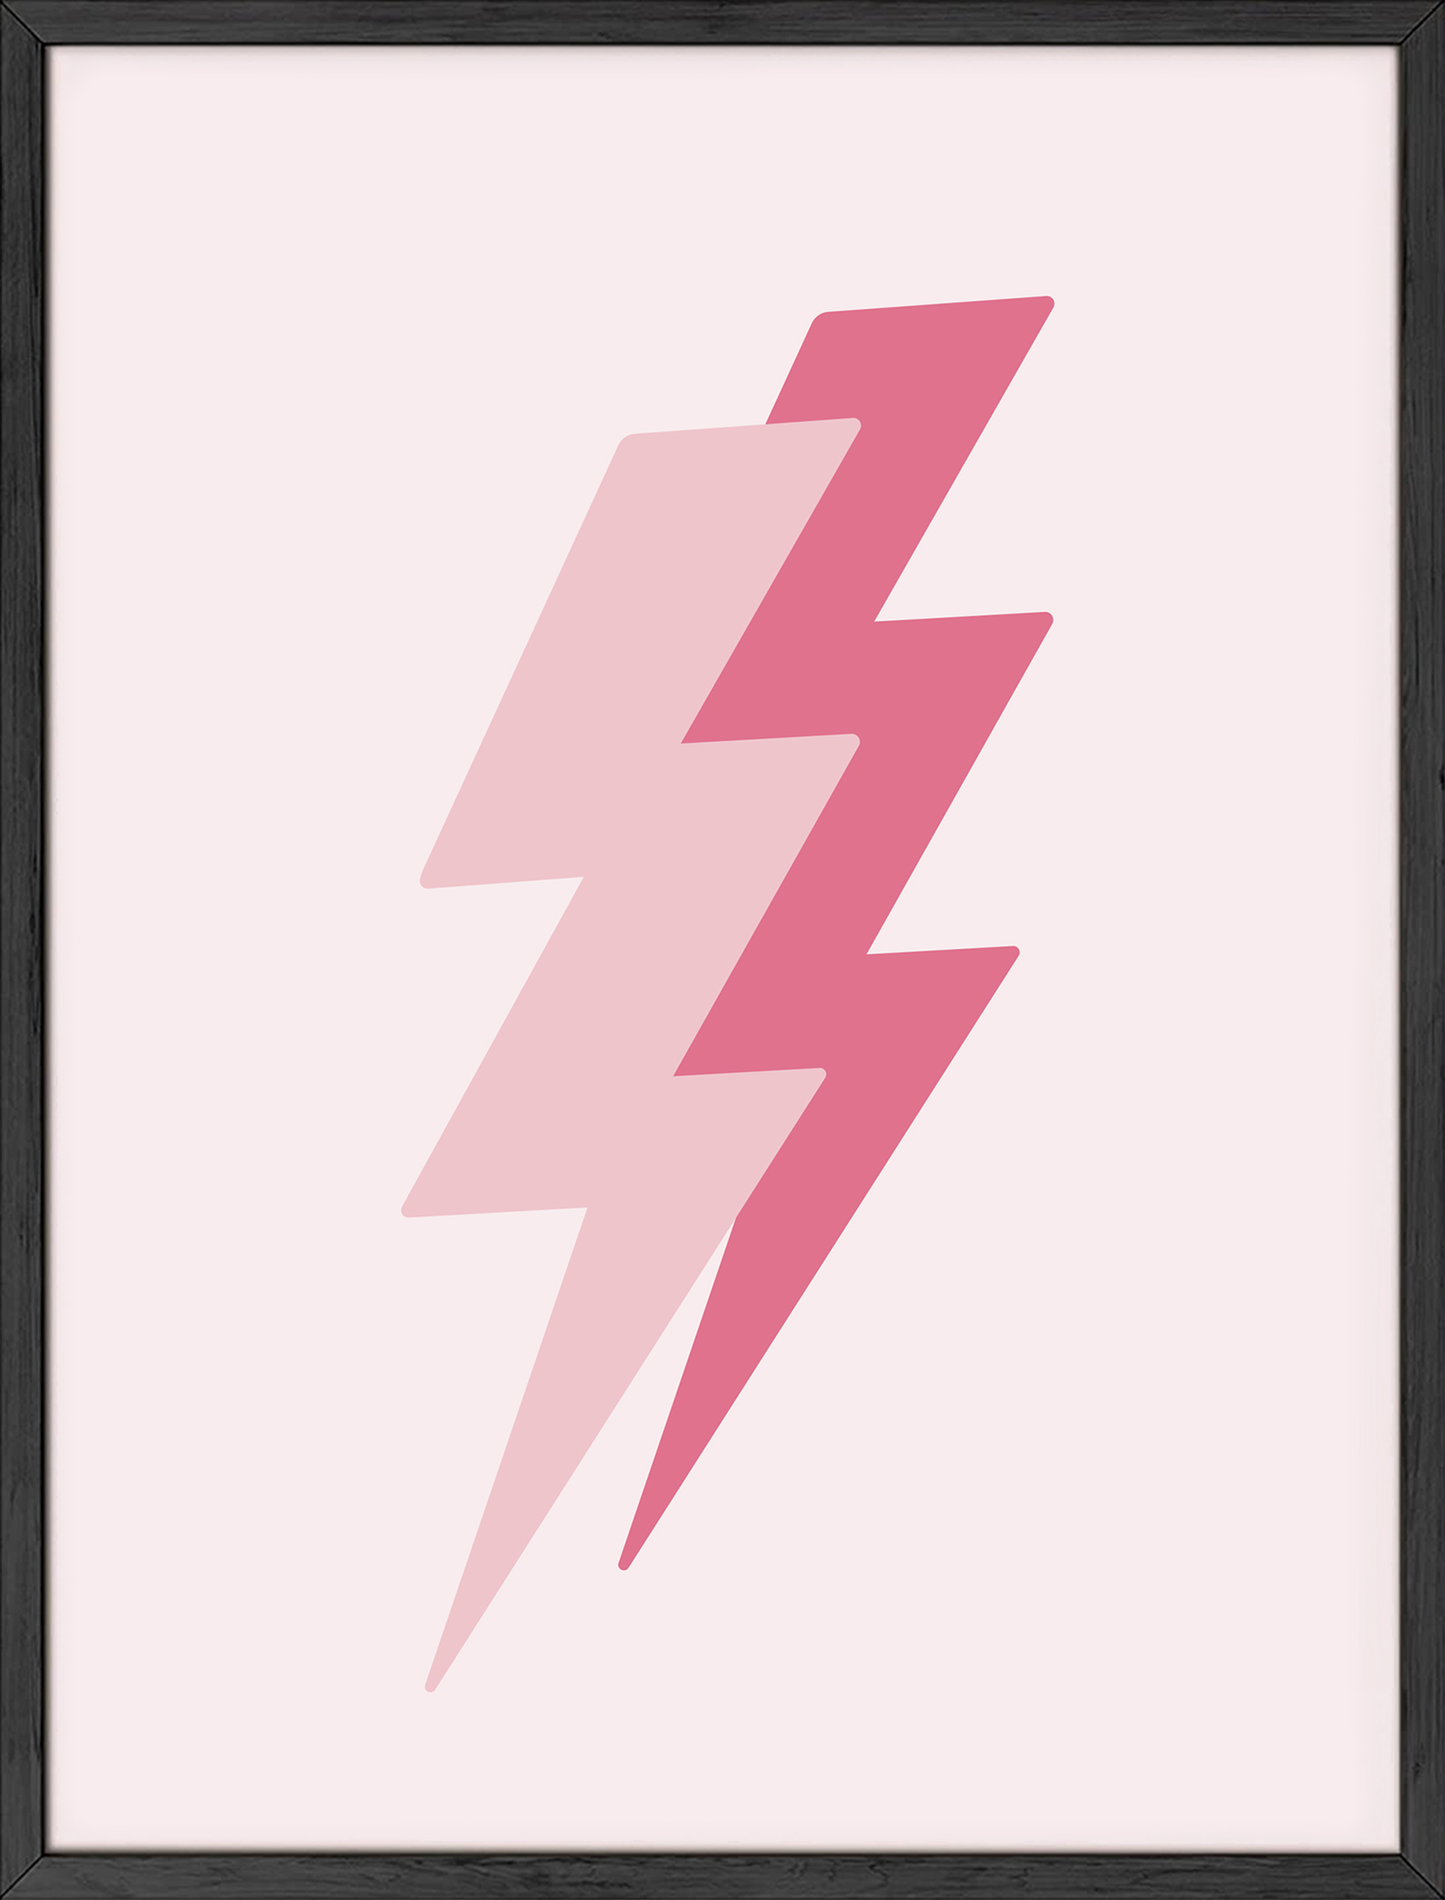 Pink Lightning